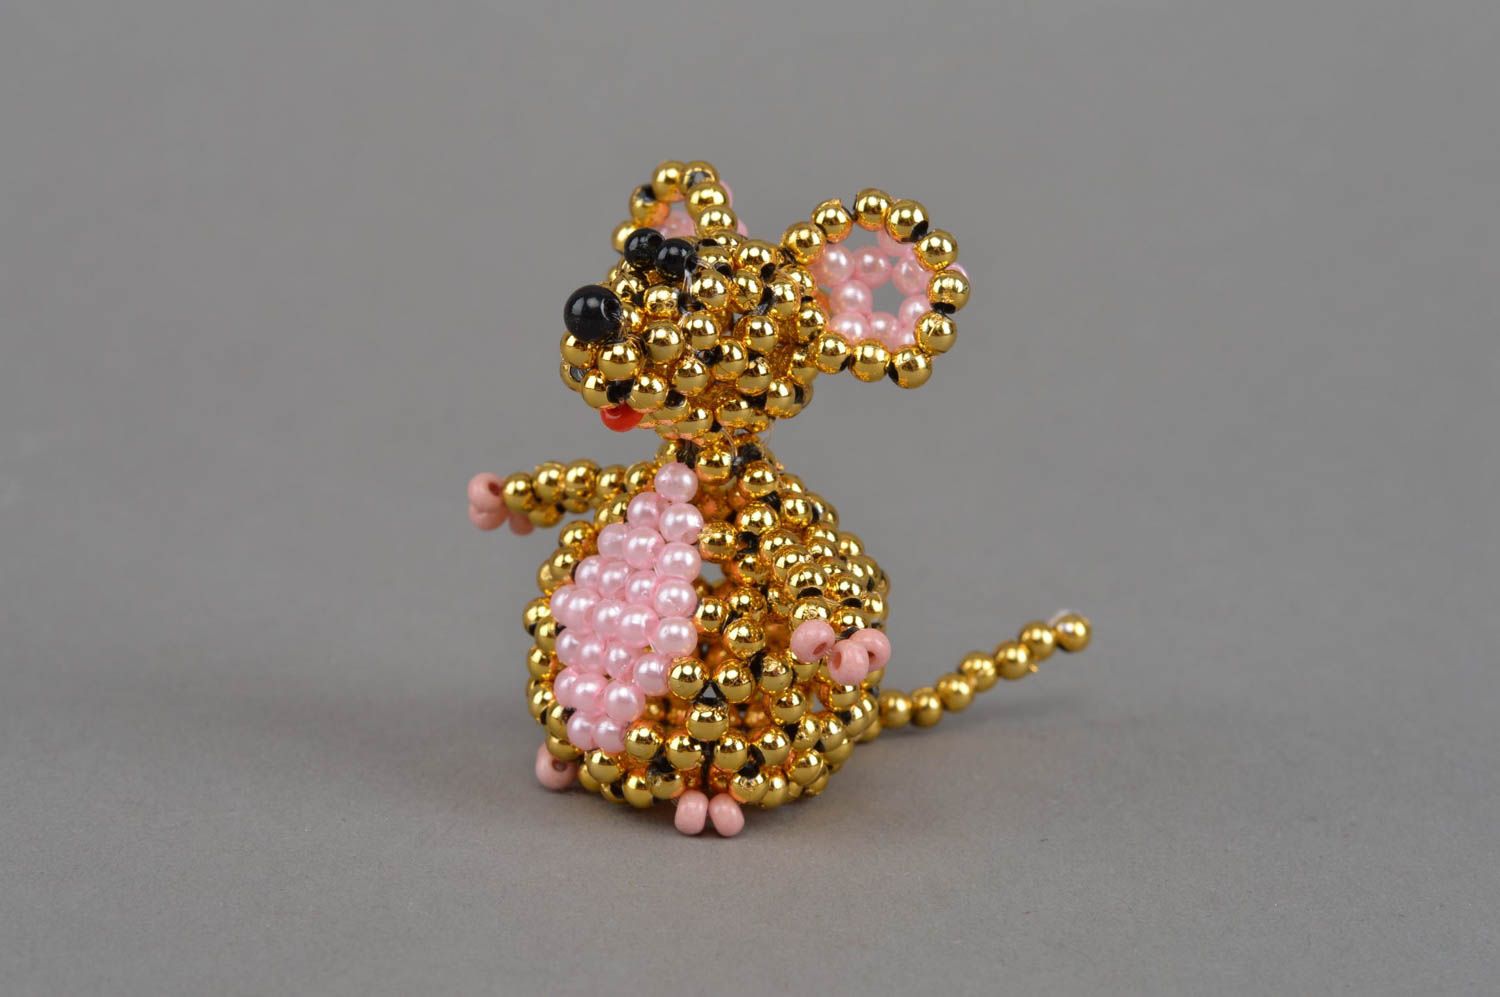 Handmade miniature collectible bead woven animal figurine of golden mouse photo 2